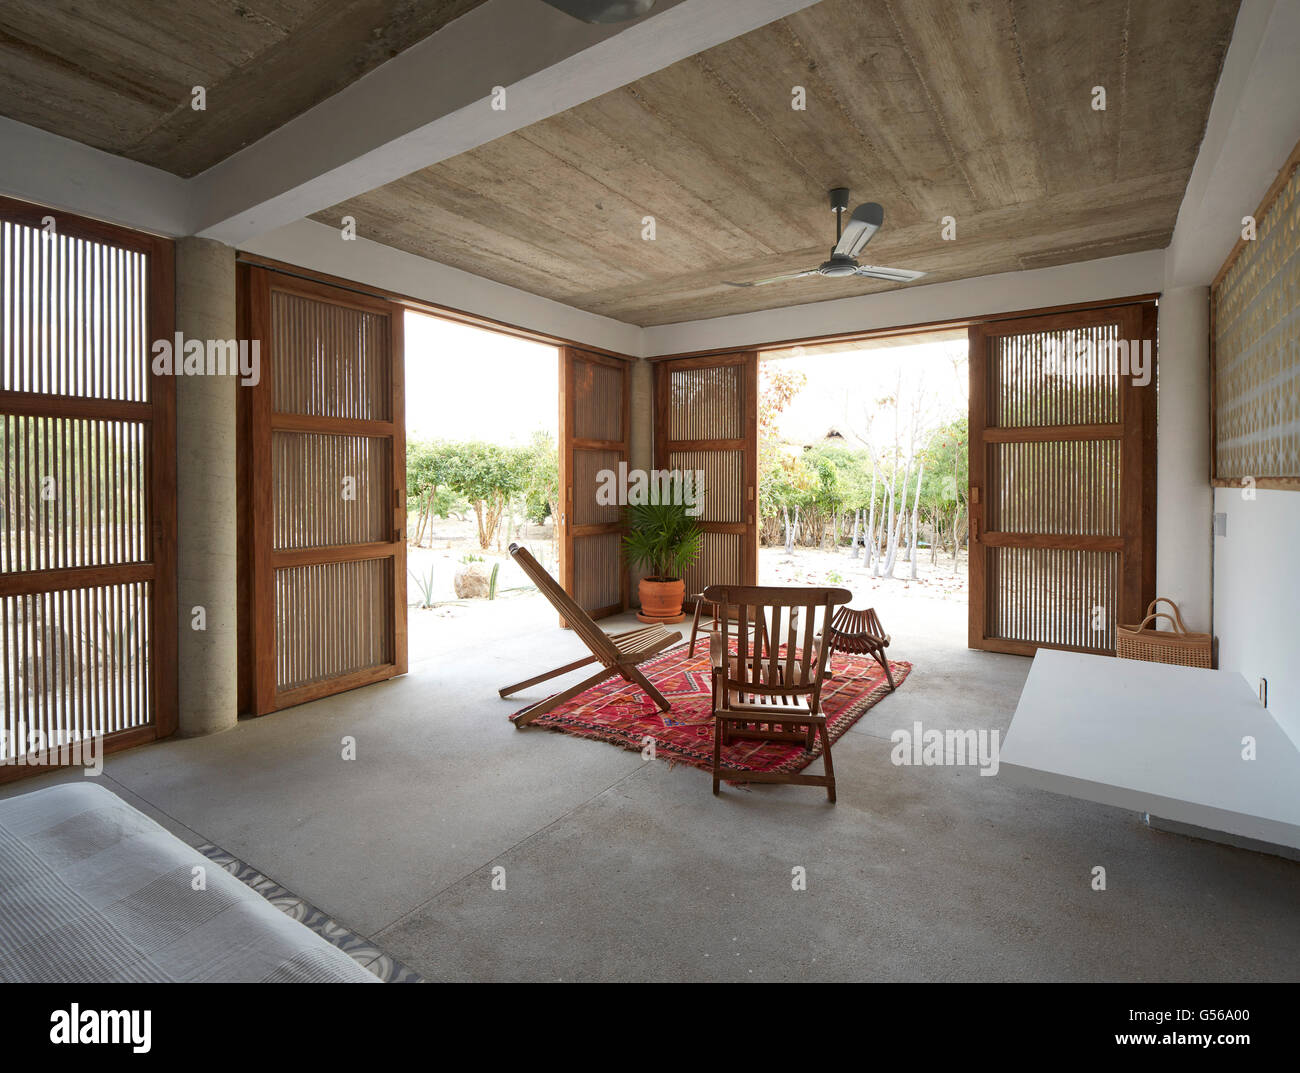 Lower level bedroom. Casa Cal, Puerto Escondido, Mexico. Architect: BAAQ, 2015. Stock Photo